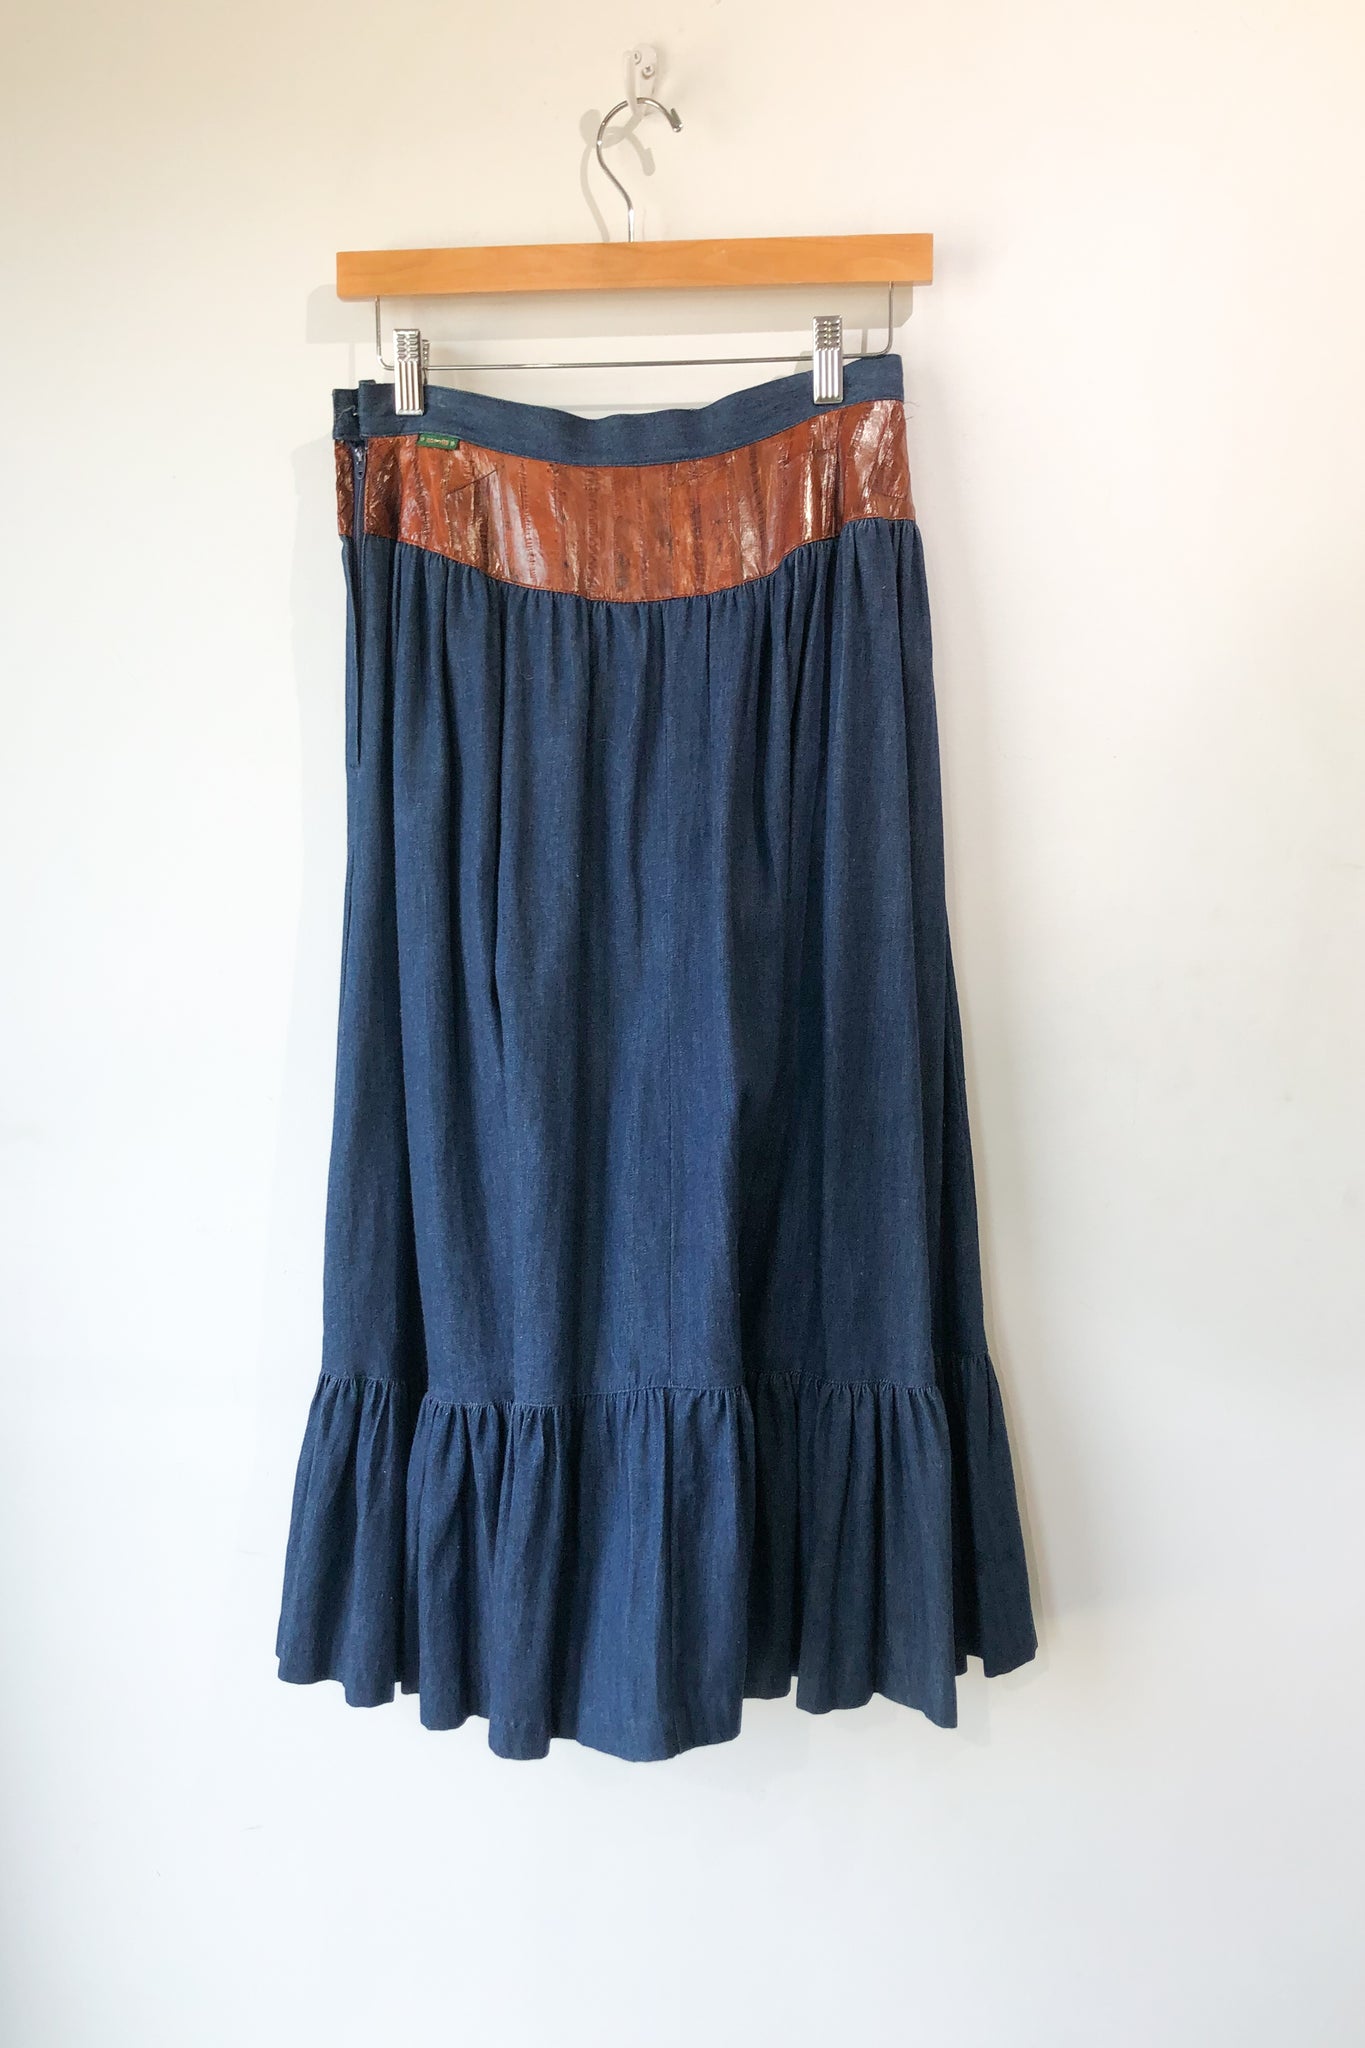 Share more than 130 denim prairie skirt latest